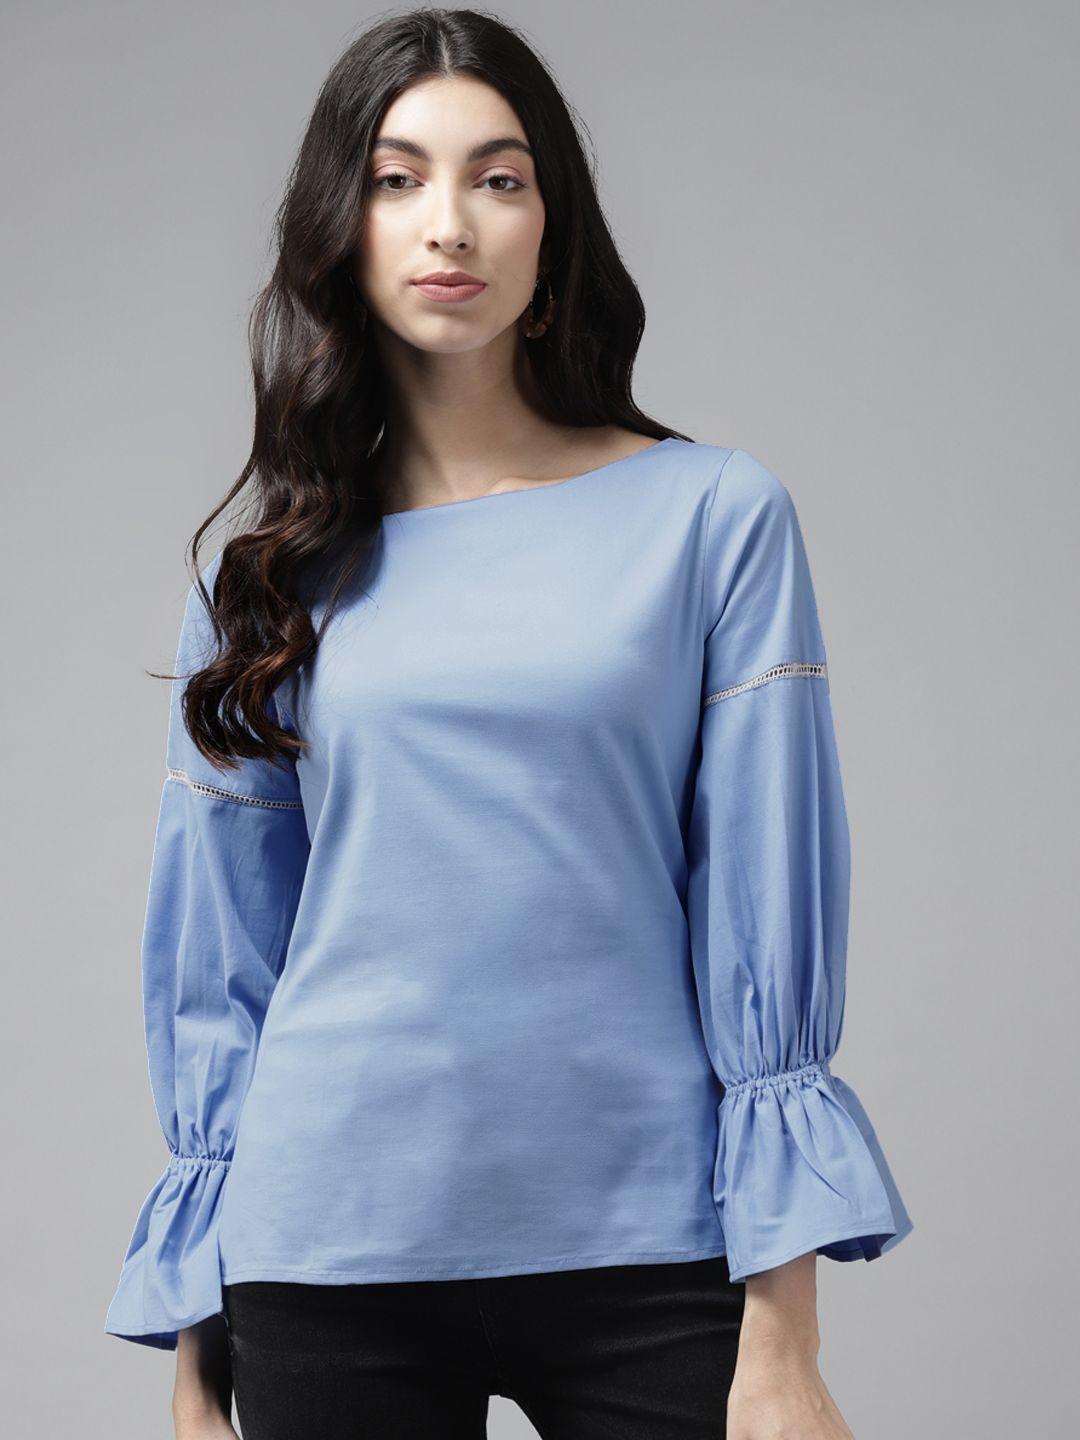 cayman-blue-bell-sleeves-pure-cotton-regular-top